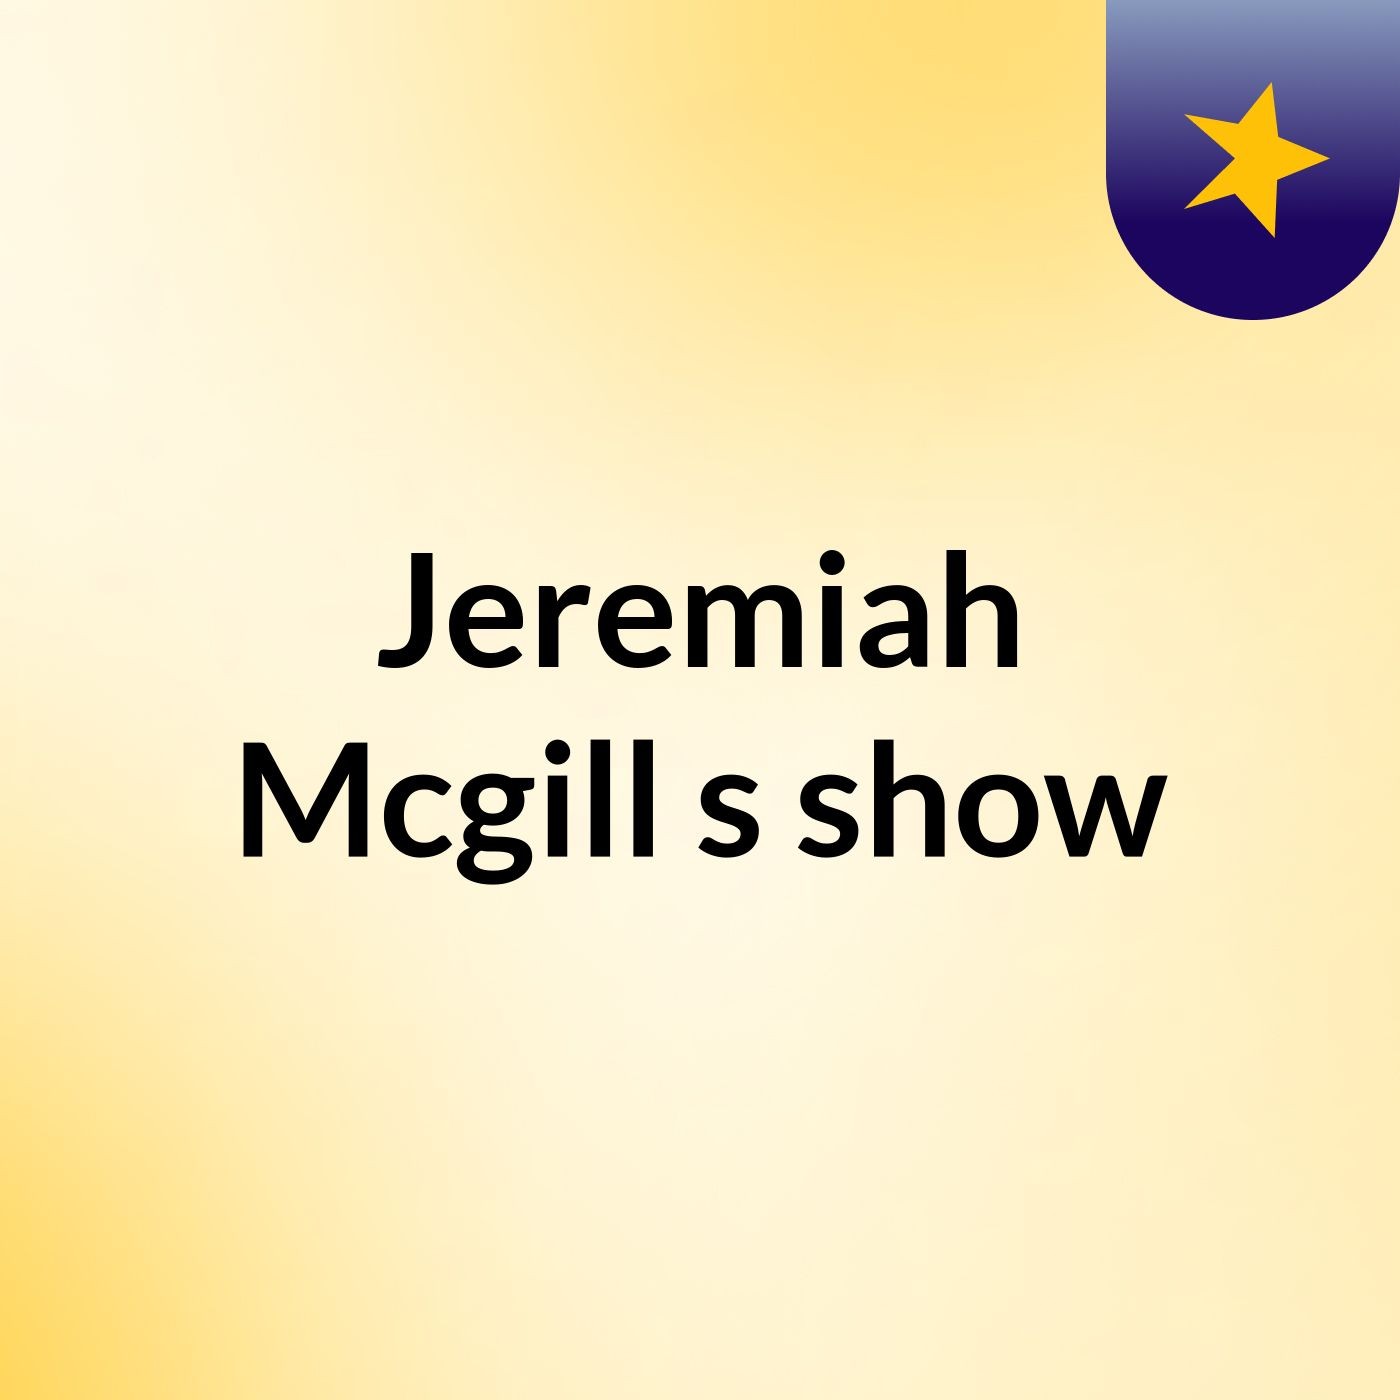 Jeremiah Mcgill's show